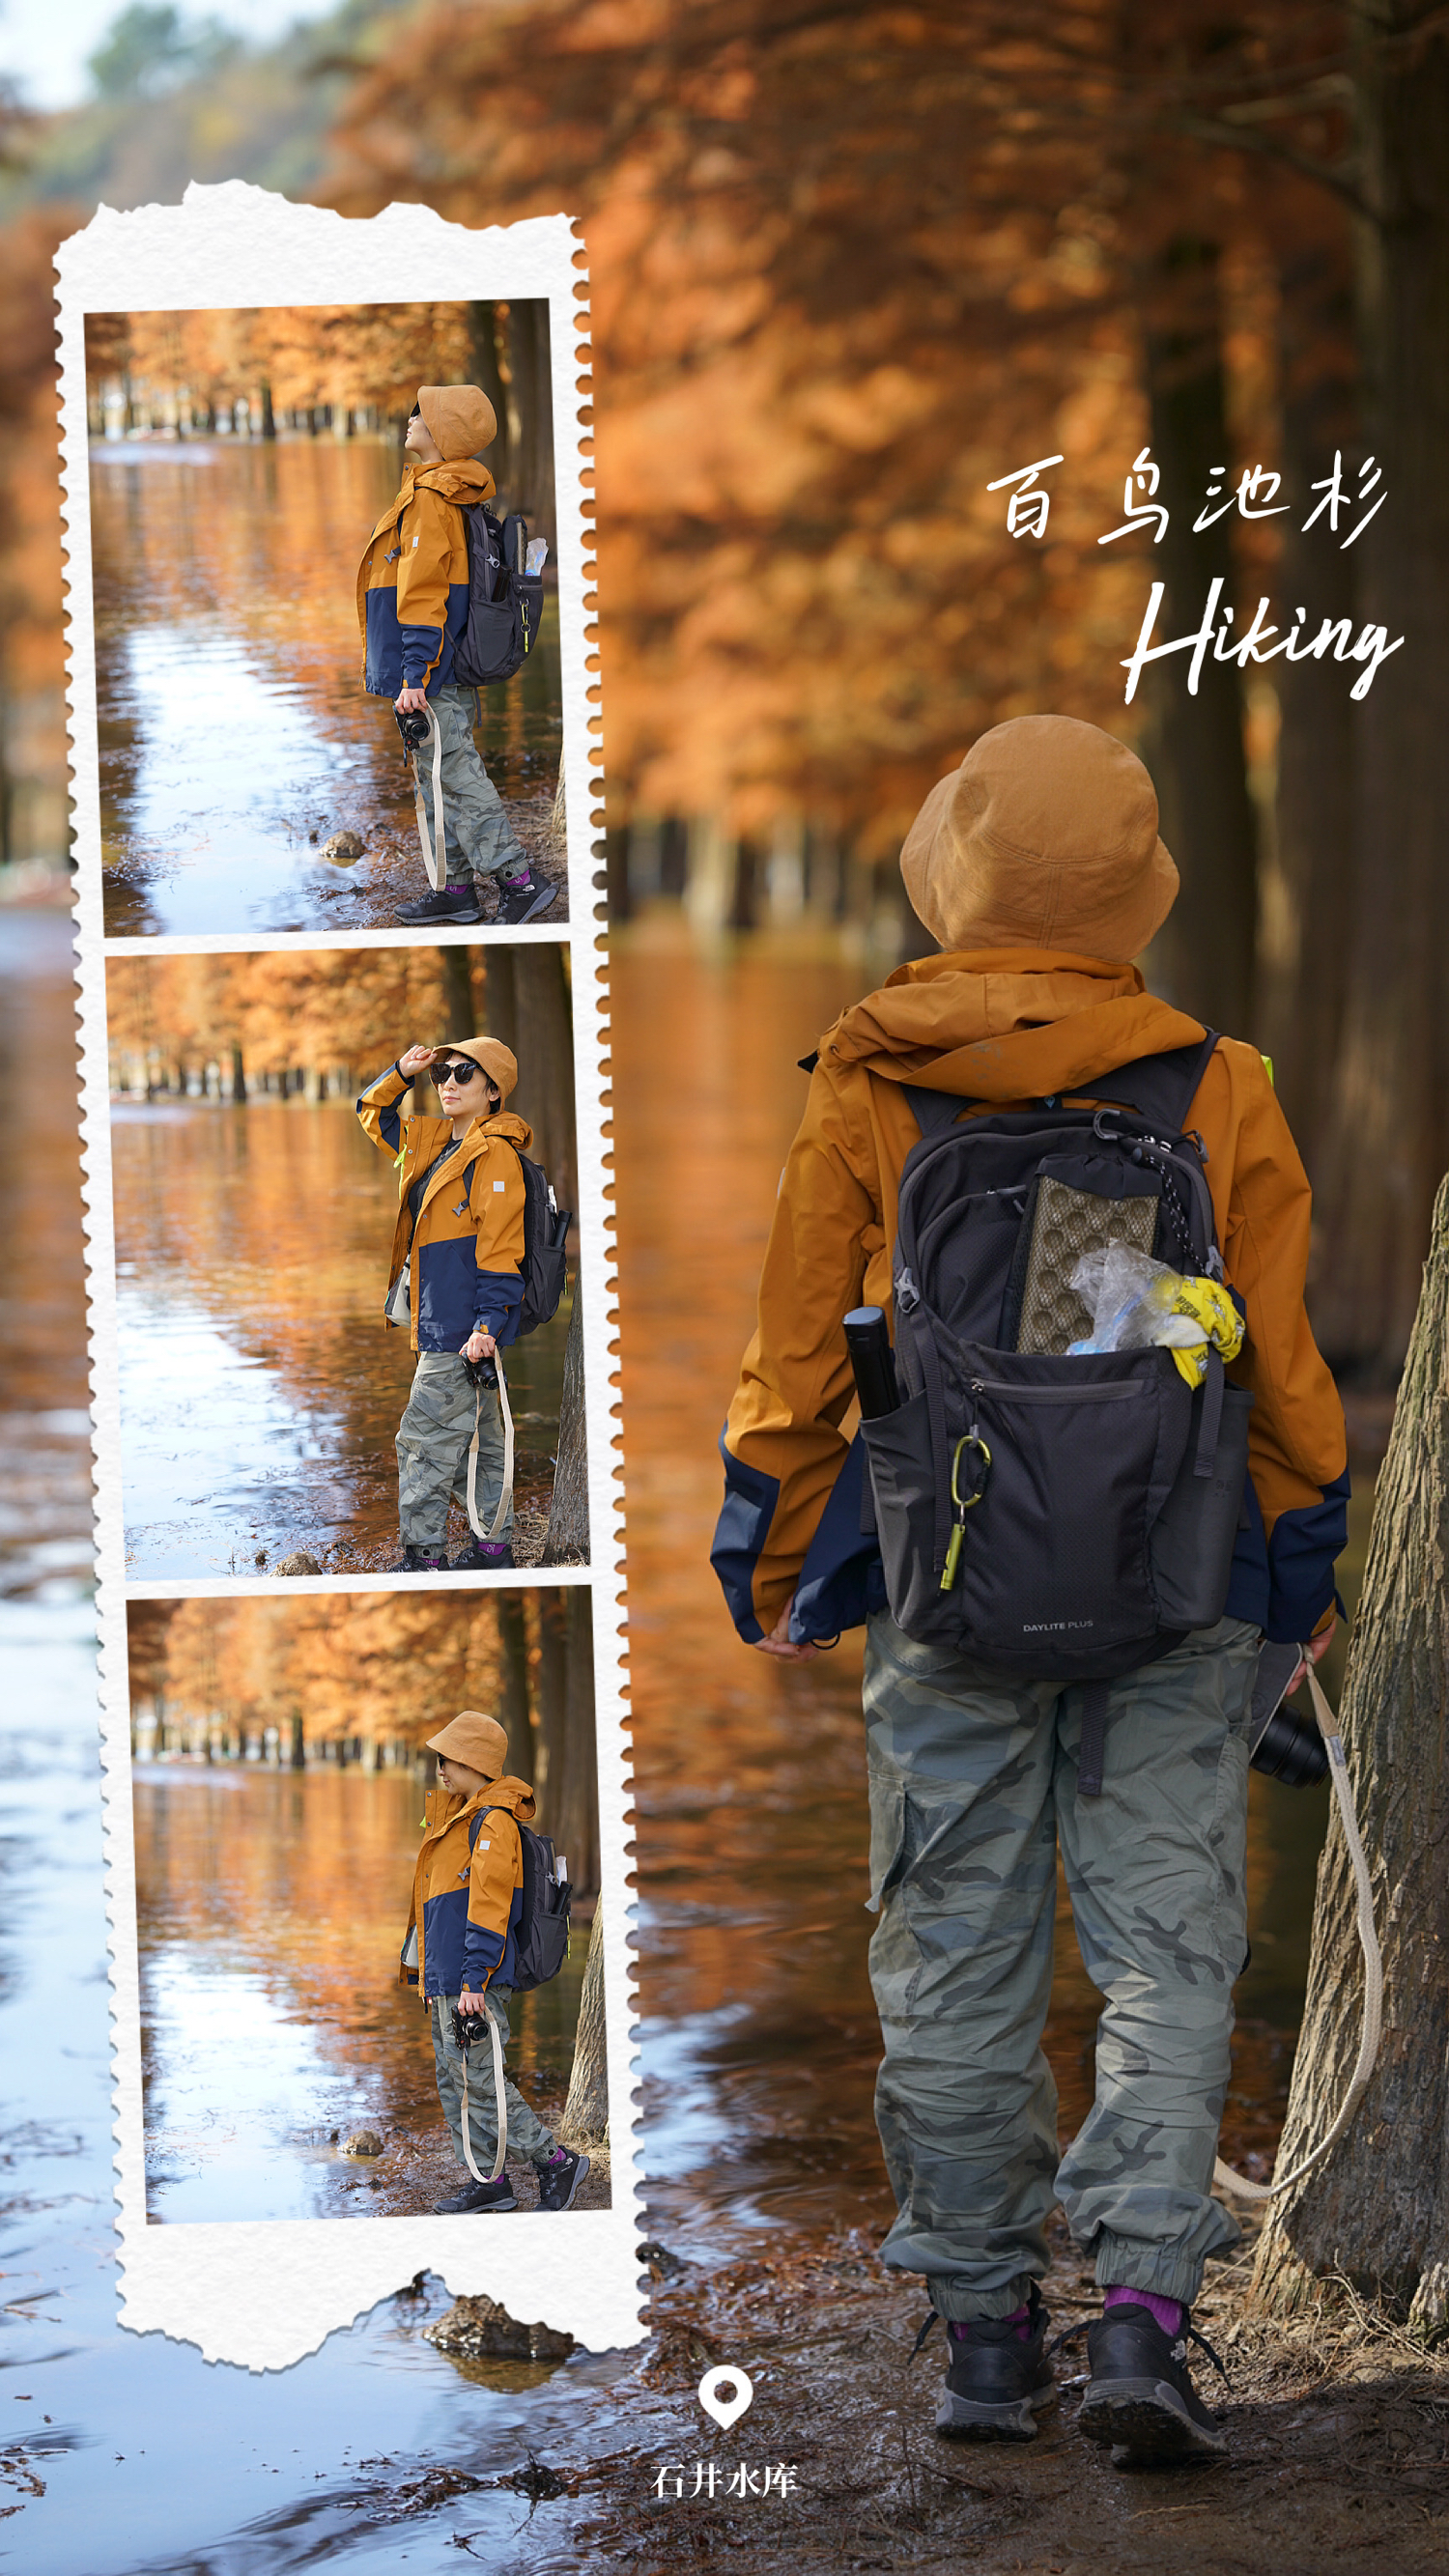 Hiking | 上虞石井水库·百鸟池杉&陶堰岭古道  冬已至，秋意正浓 江南的秋色总是更晚一些  